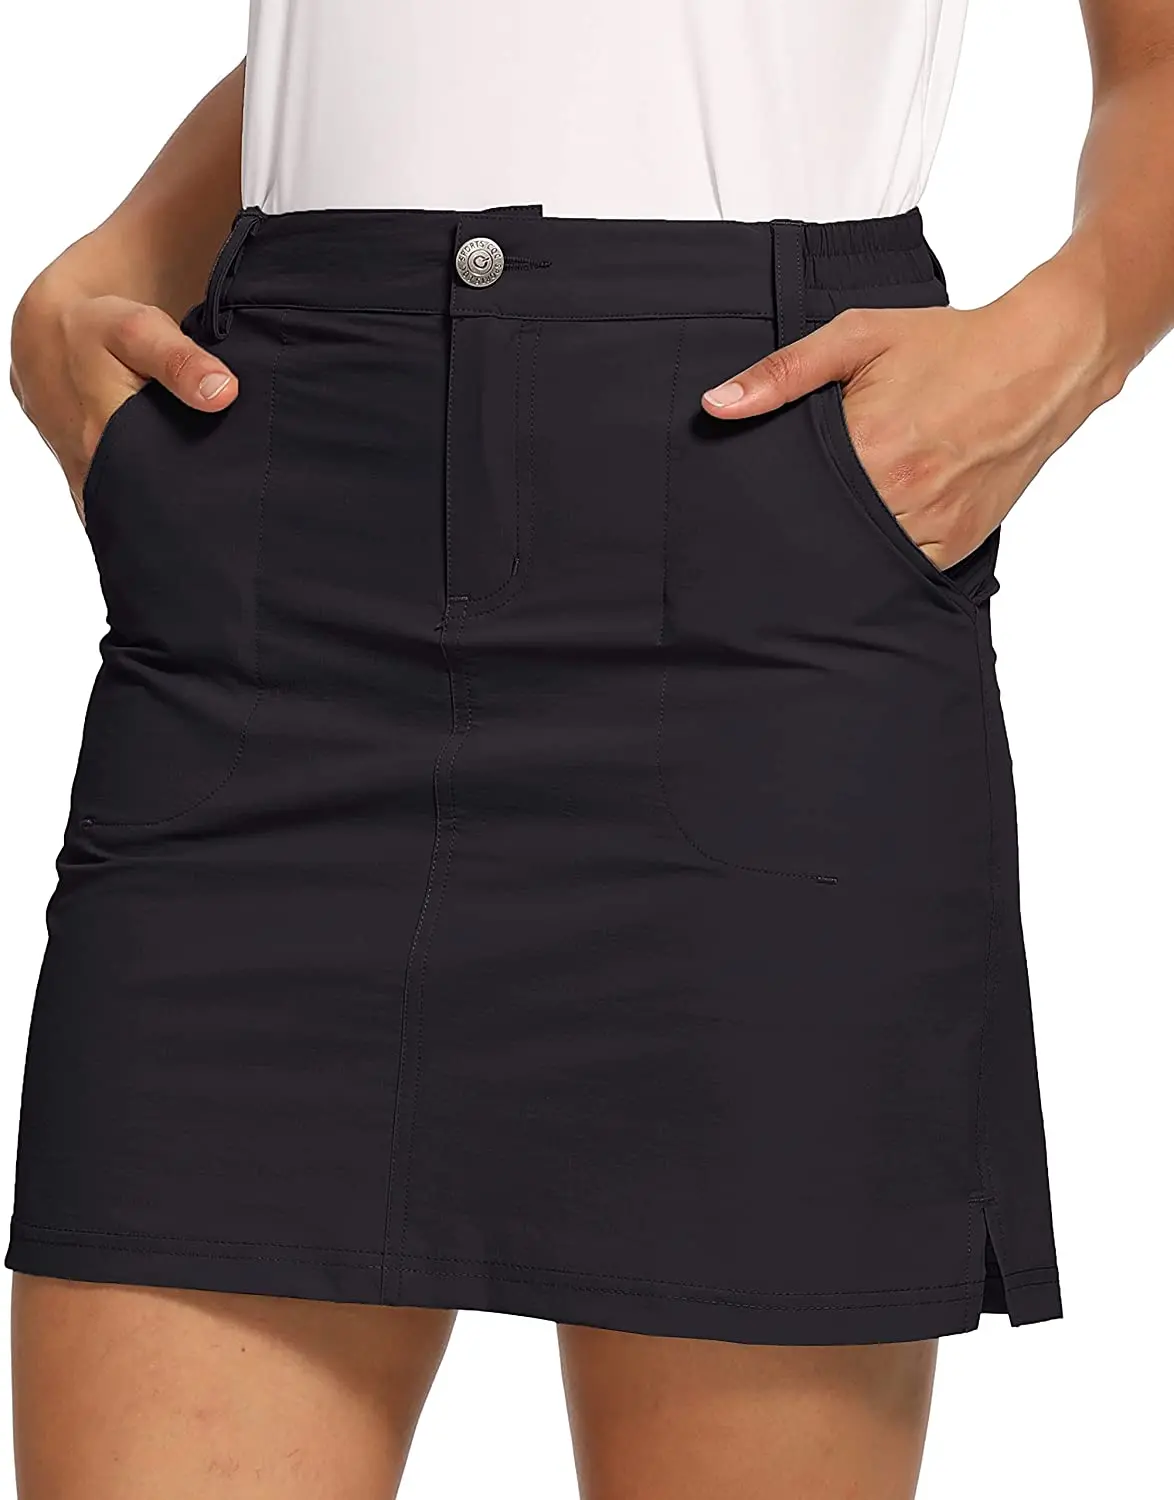 Womens Outdoor Skort Golf Skorts Active Athletic Skort UPF 50+ Hiking Casual Skirt Quick Dry with Pockets